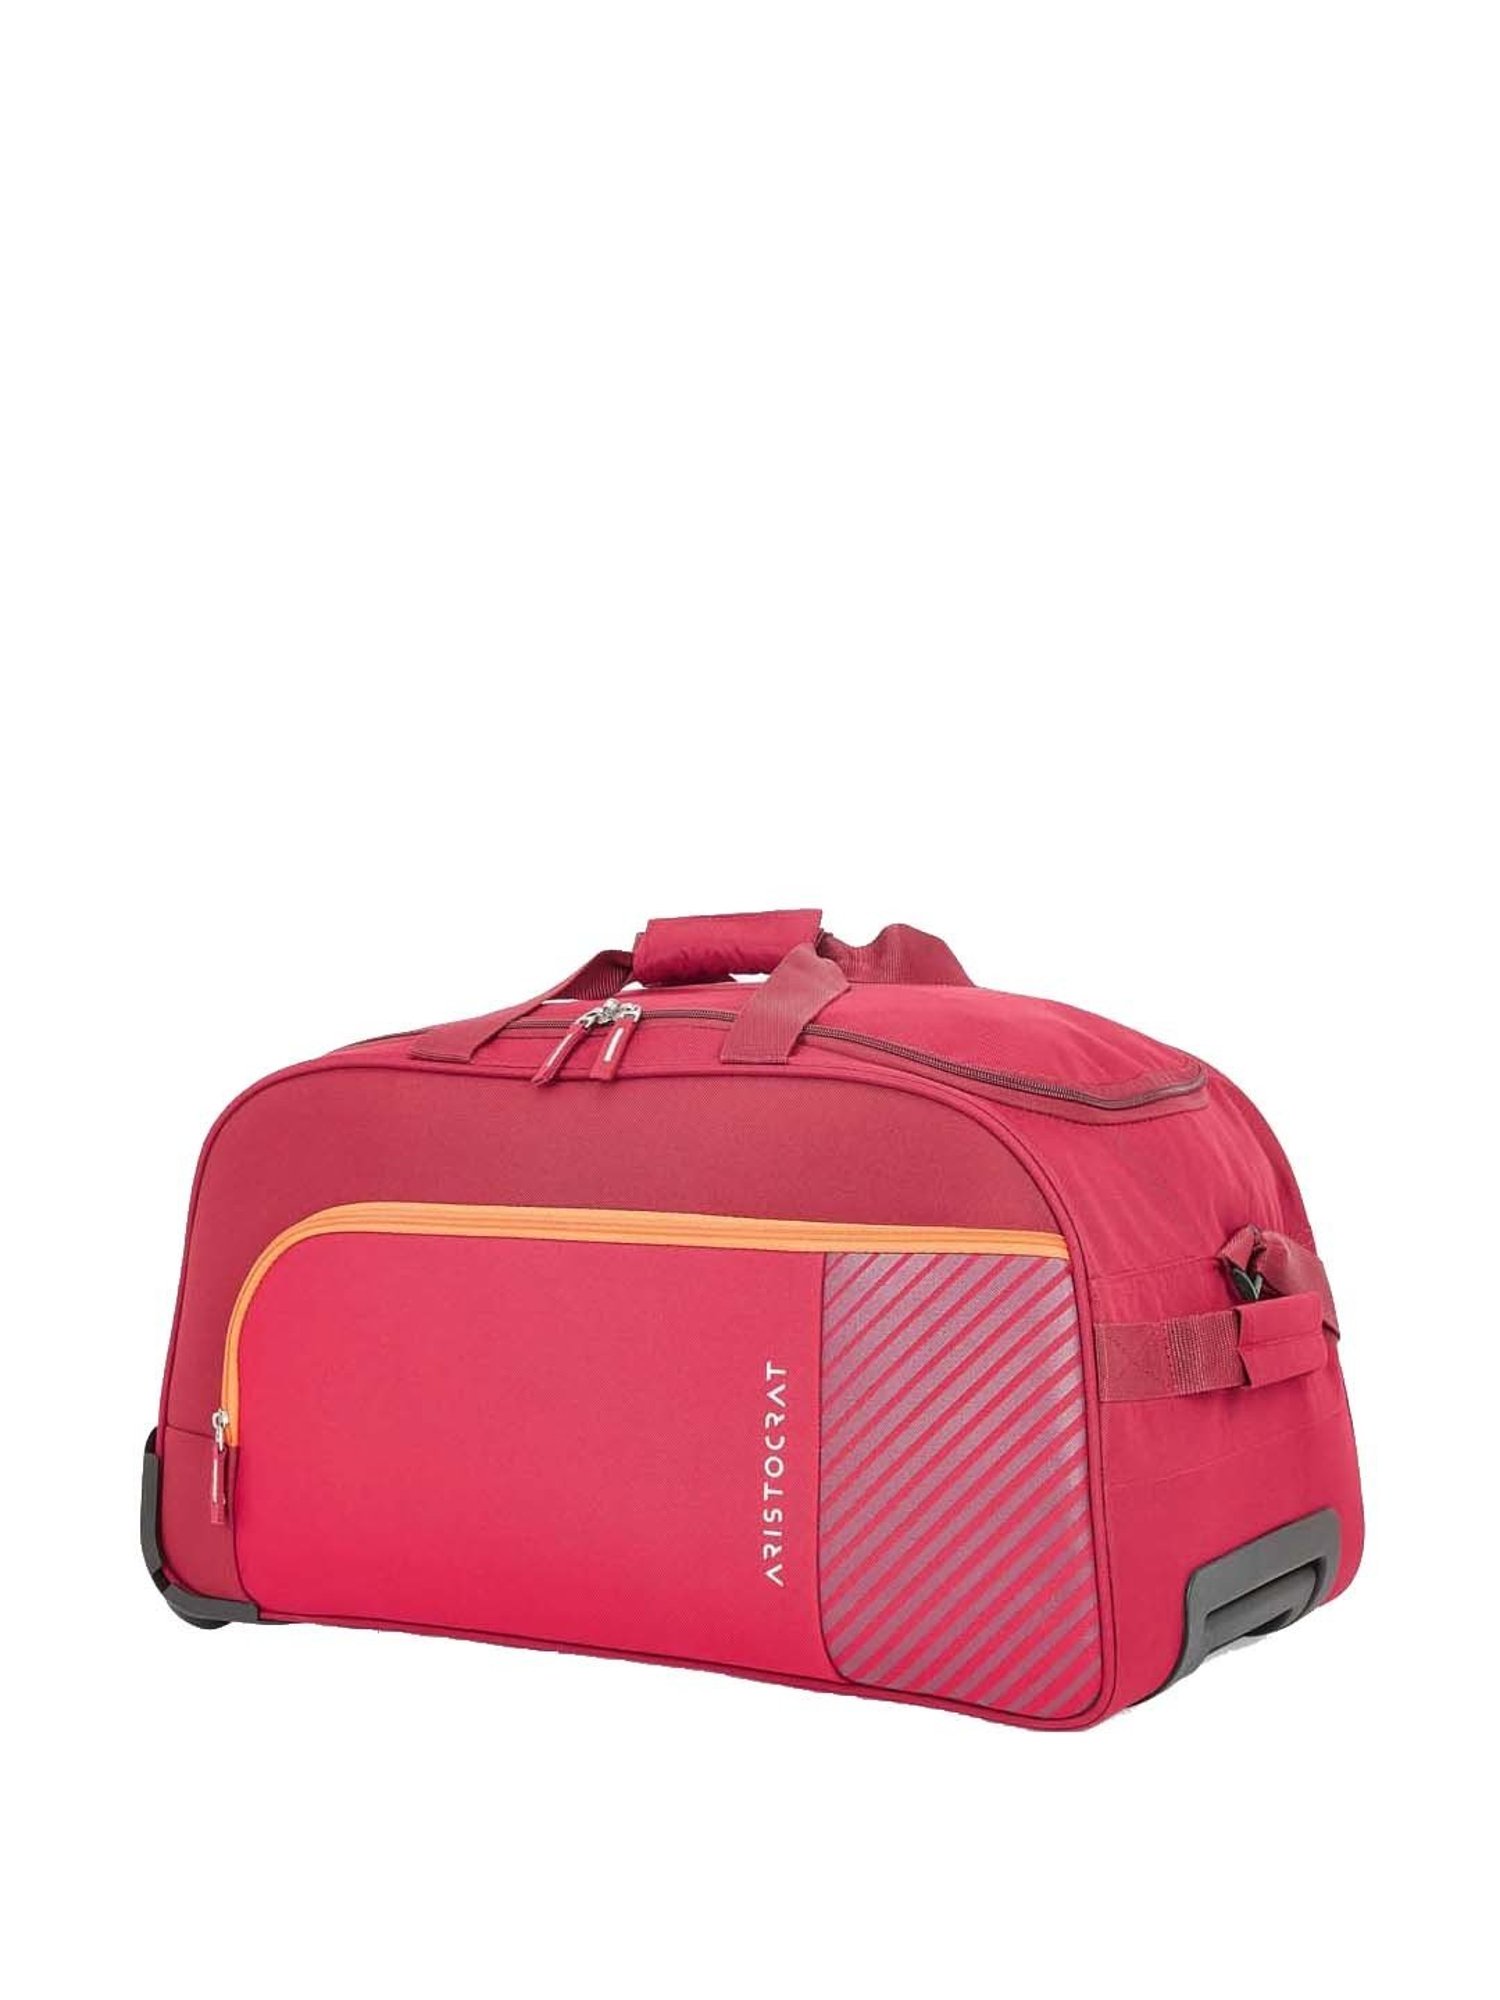 Buy Aristocrat Smash Red Medium Duffle Trolley Bag  Pack of 2 Online At  Best Price  Tata CLiQ